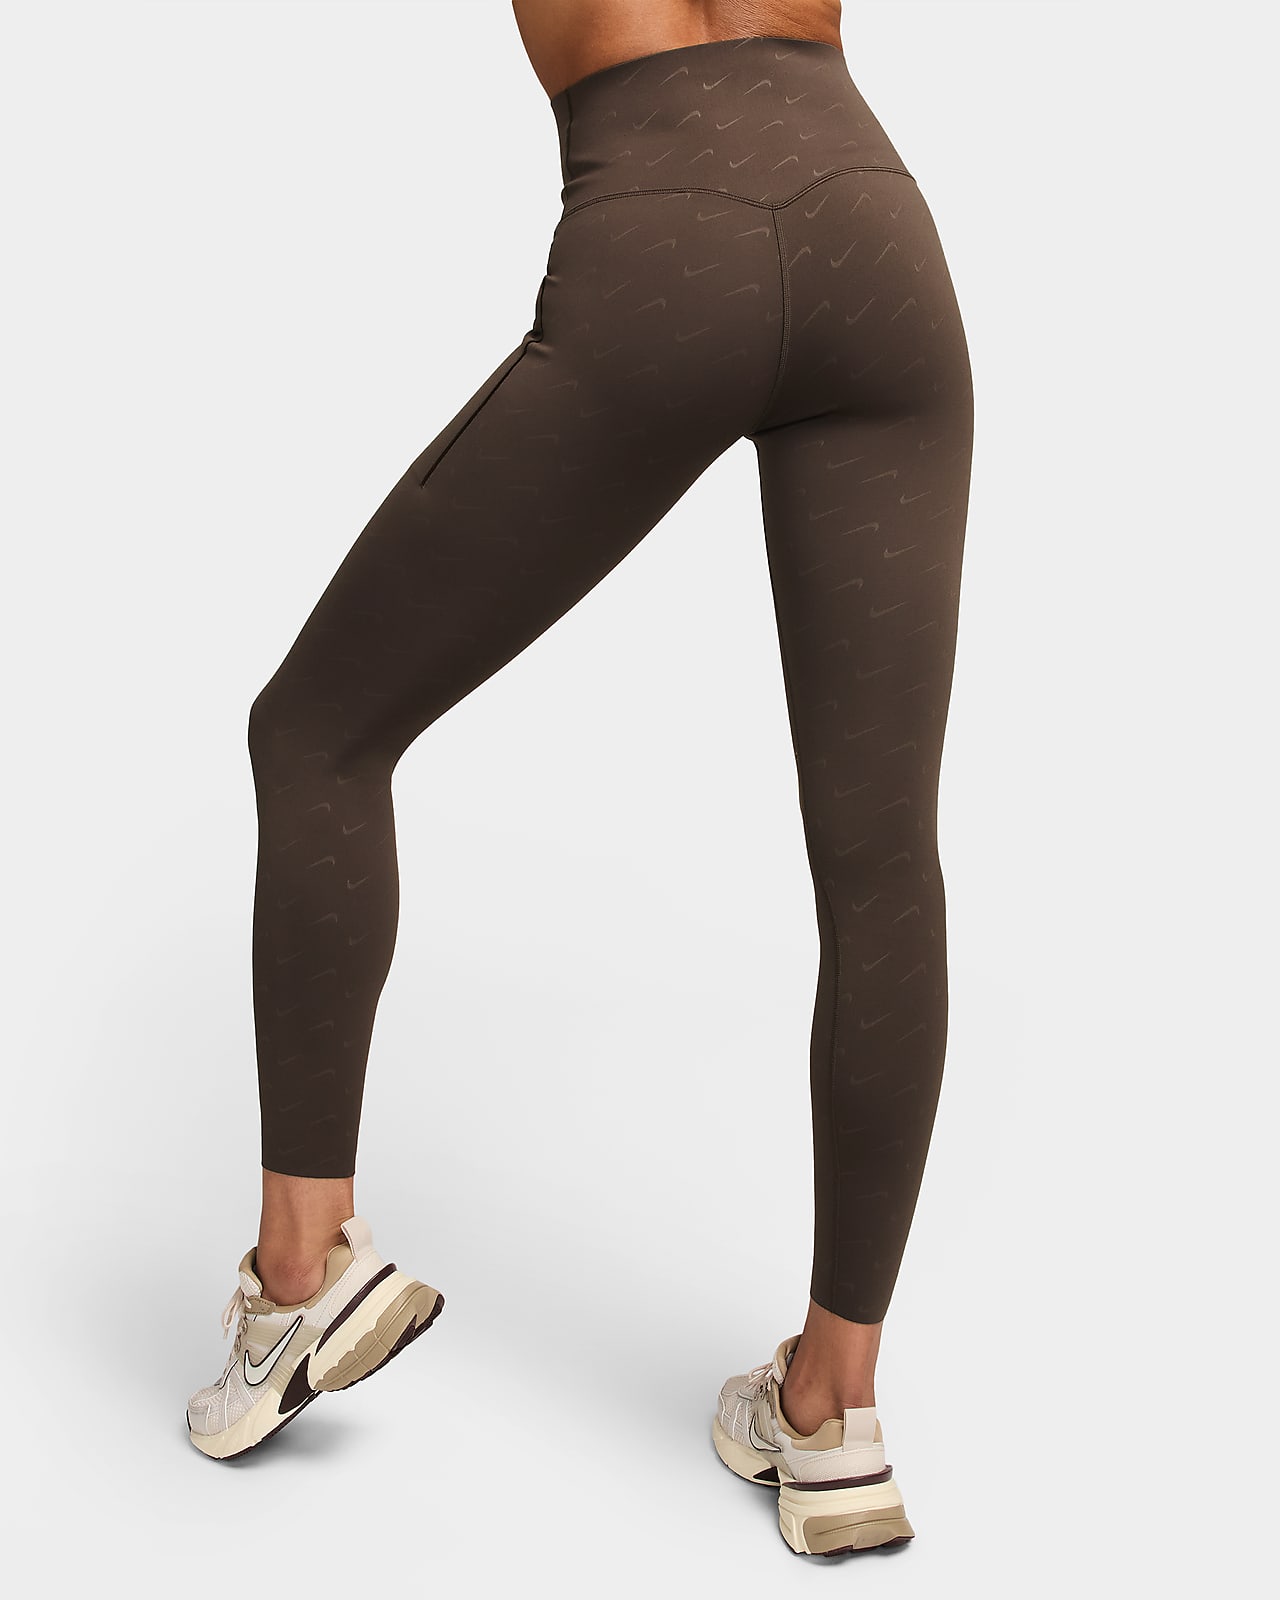 Buy Nike Women's Sportswear Gingham 7/8 Tights in Active Fuchsia/White 2024  Online